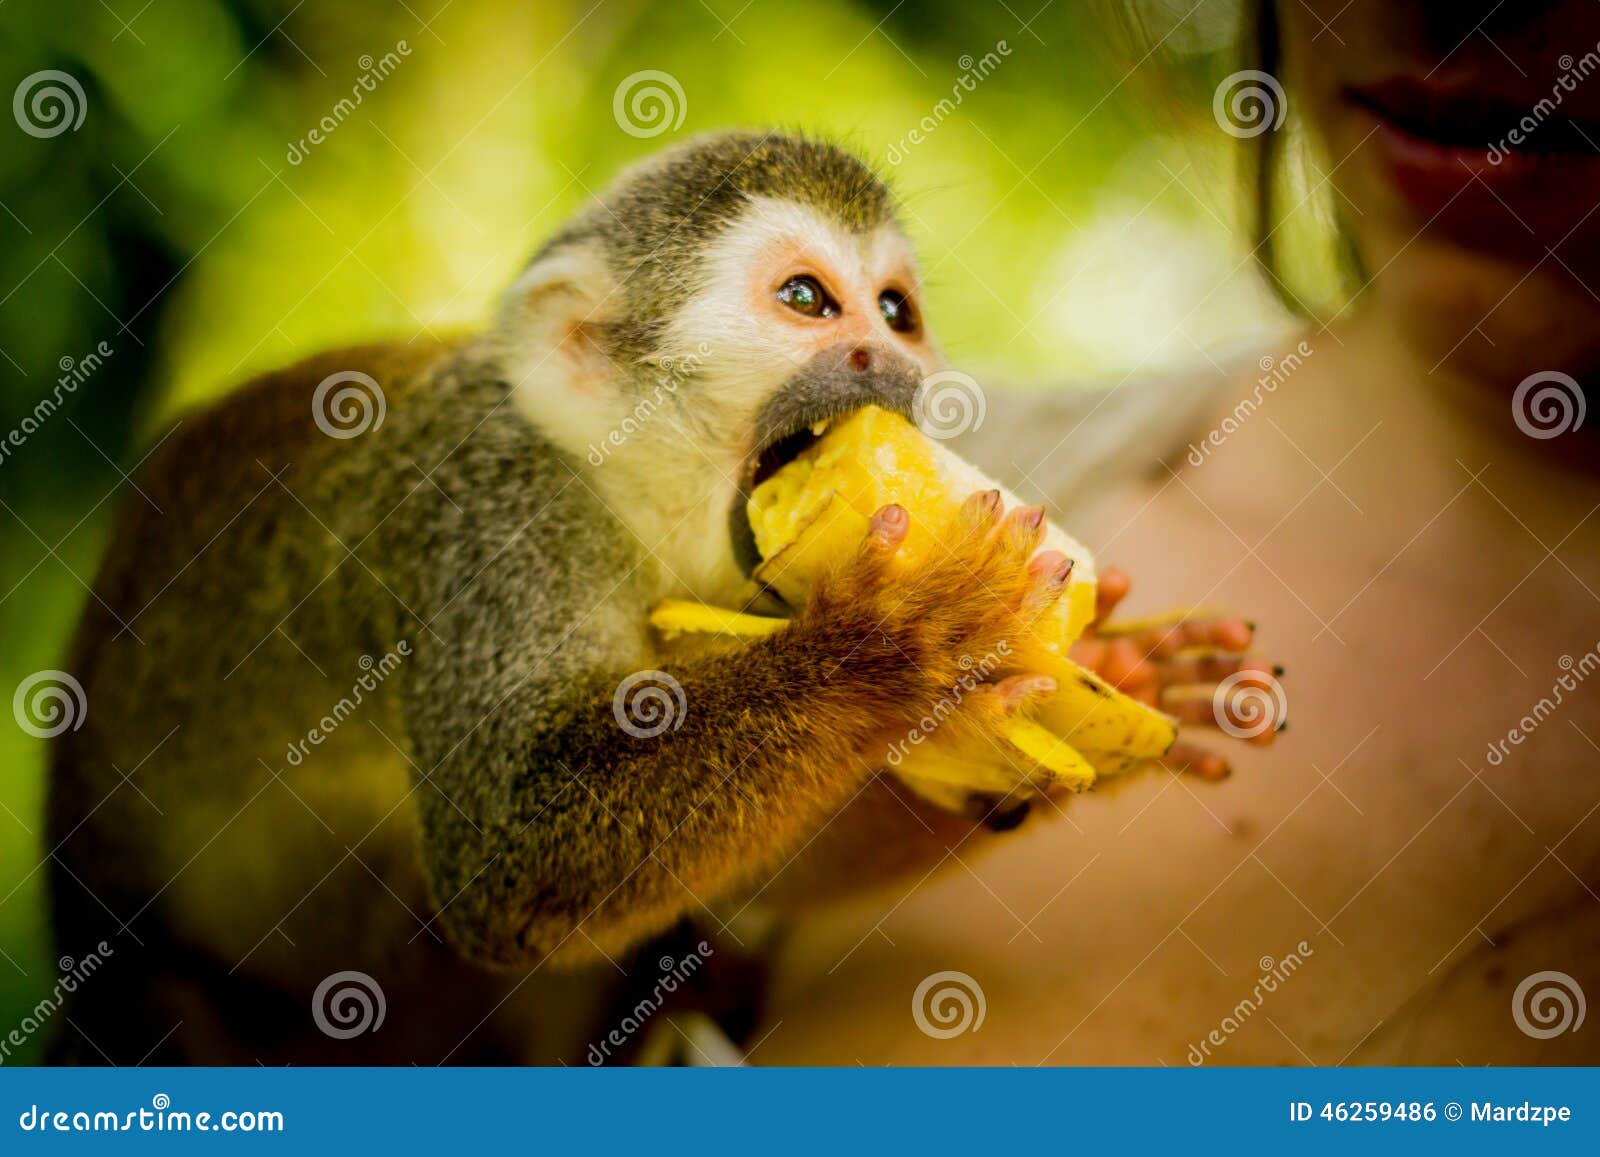 squirrel monkeys eating